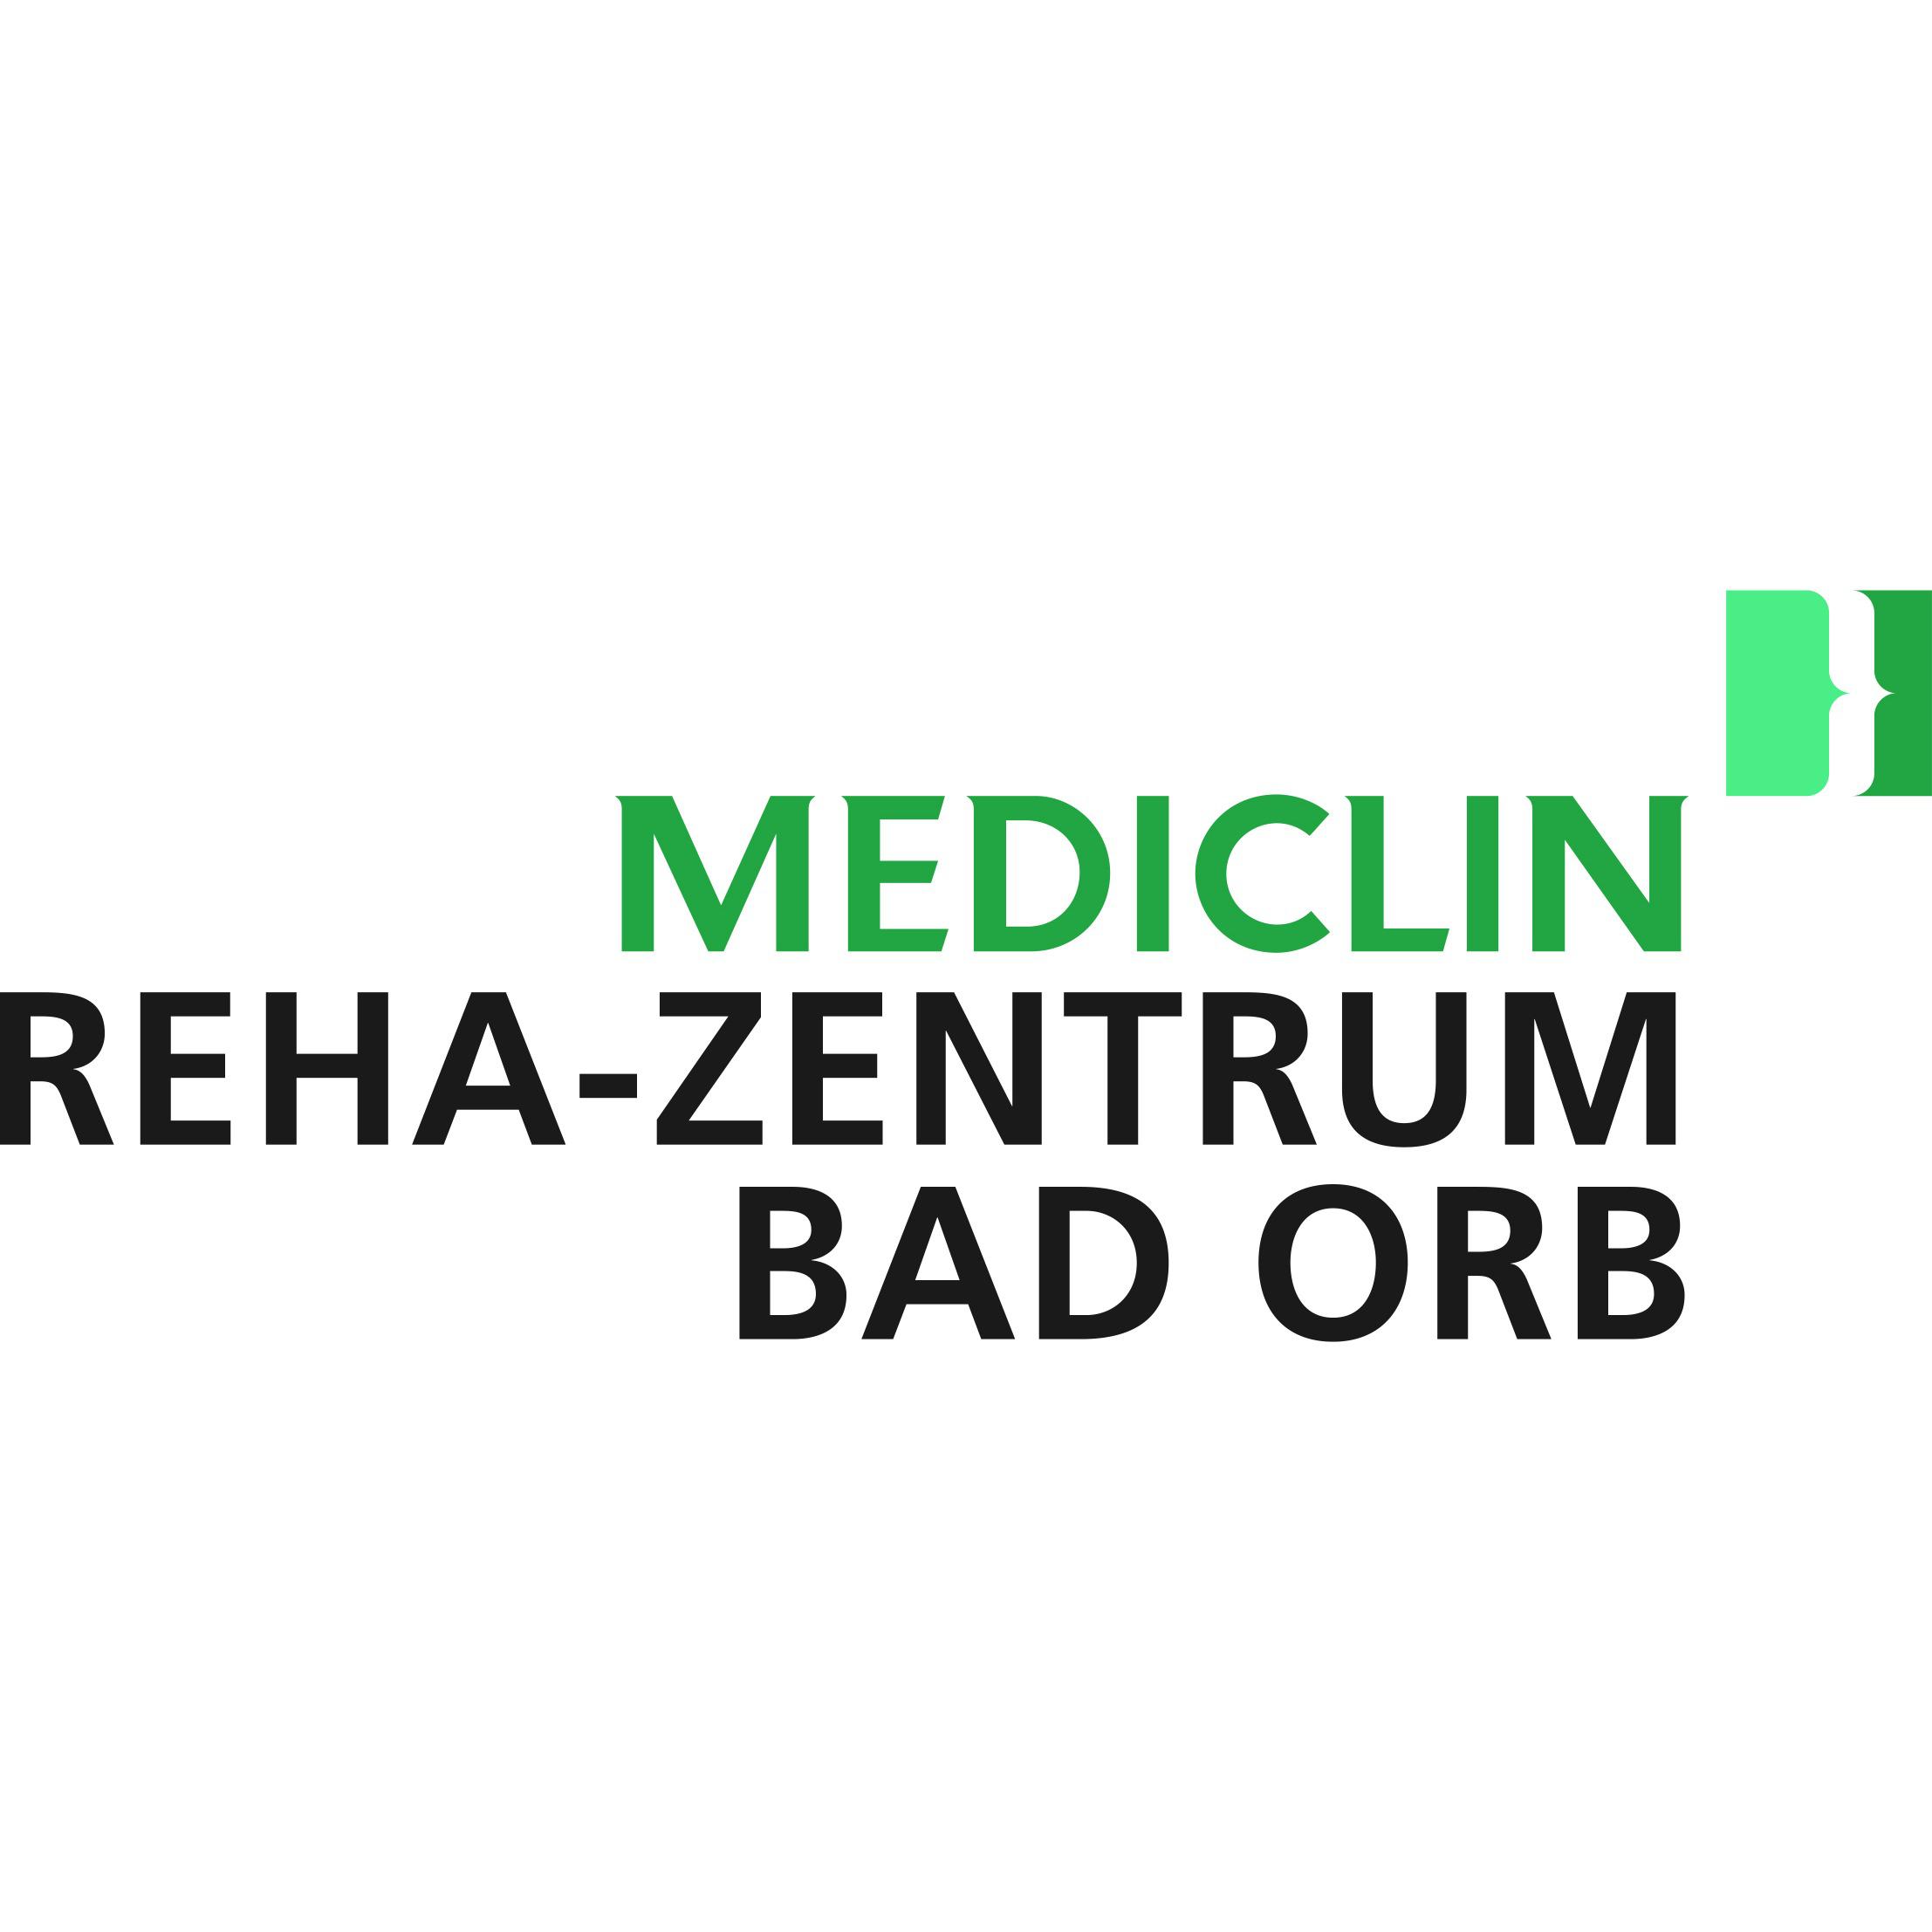 MEDICLIN Reha-Zentrum Bad Orb Logo